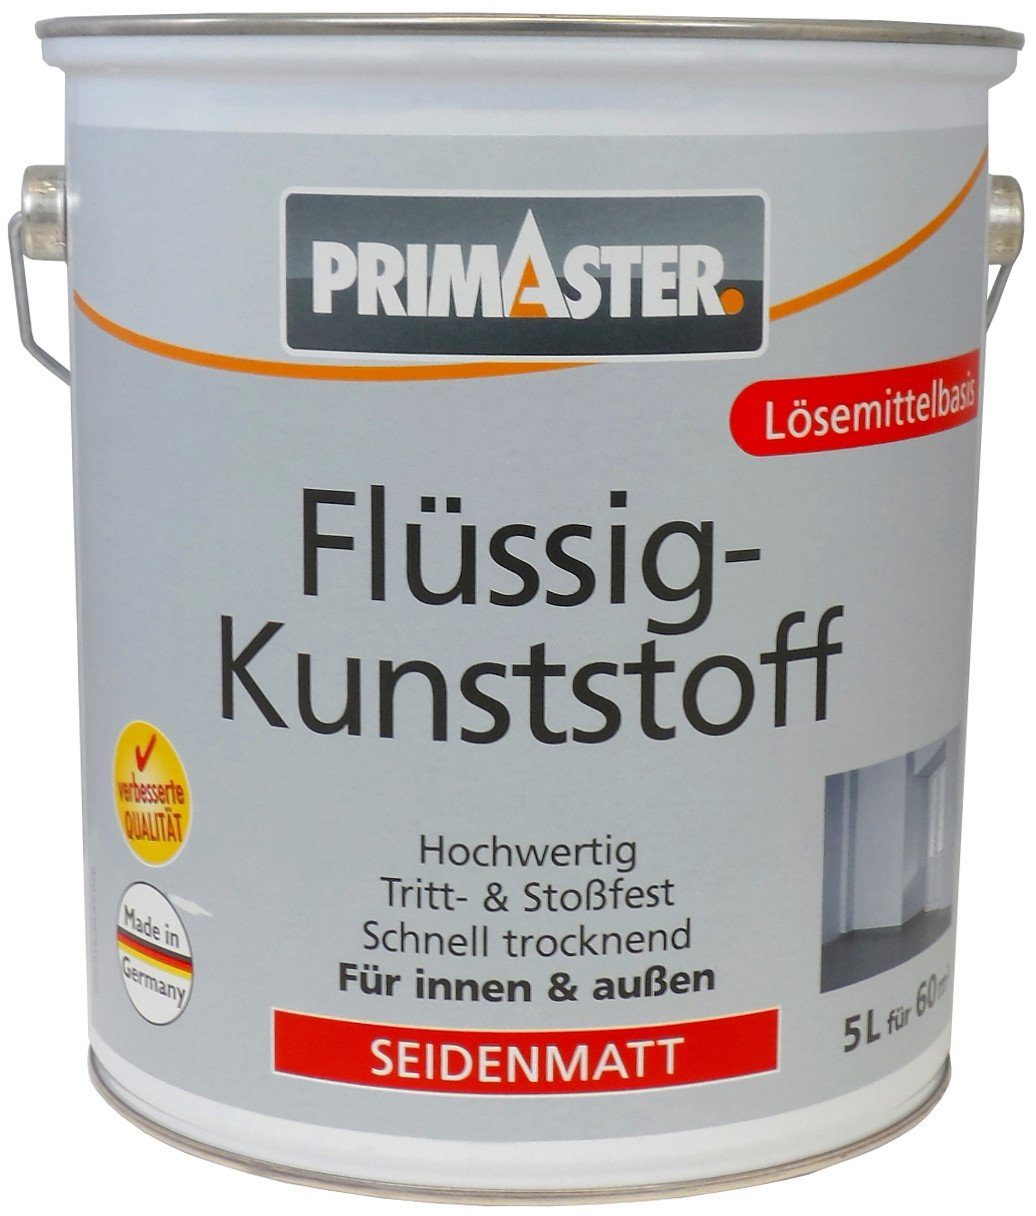 Primaster Acryl-Flüssigkunststoff Primaster 5 Premium L Flüssigkunststoff 7001 RAL